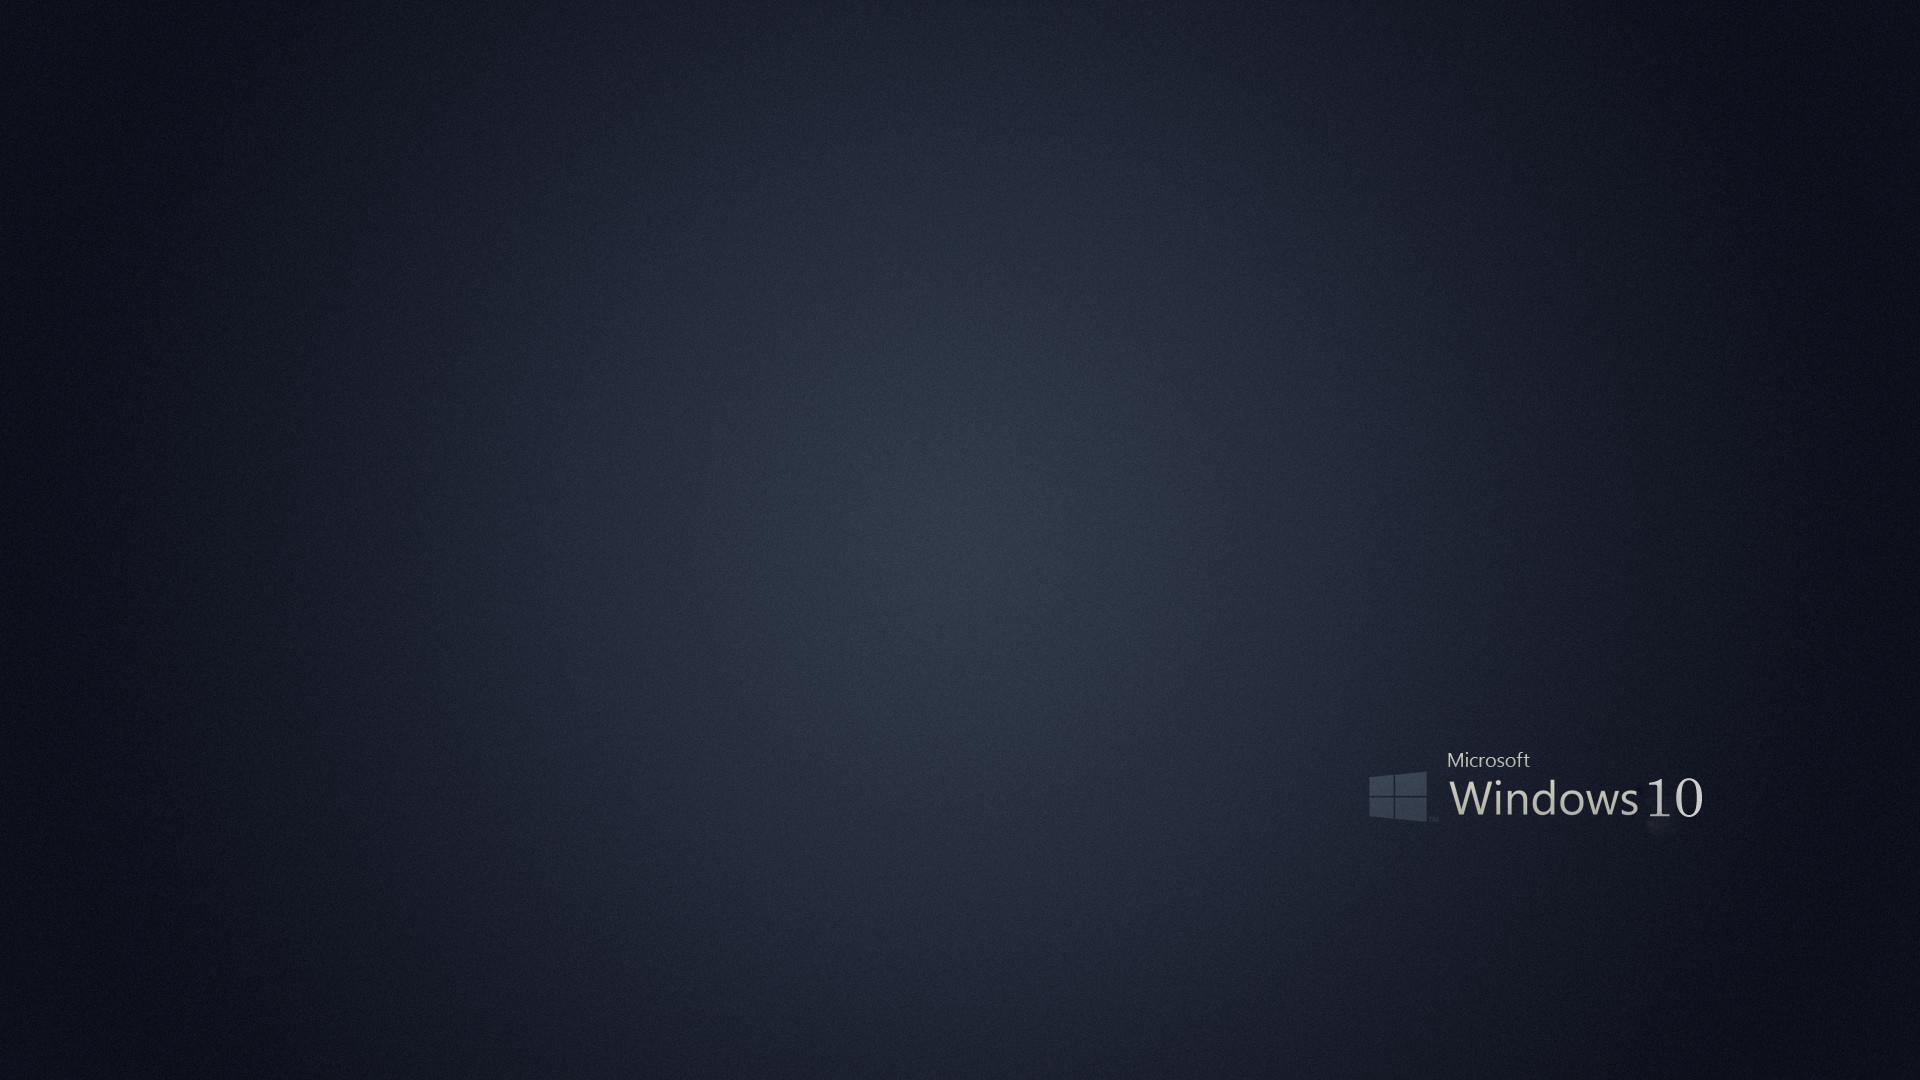 Windows 10 Black And Blue Wallpaper 4K : Windows 10 4K Wallpaper Dark